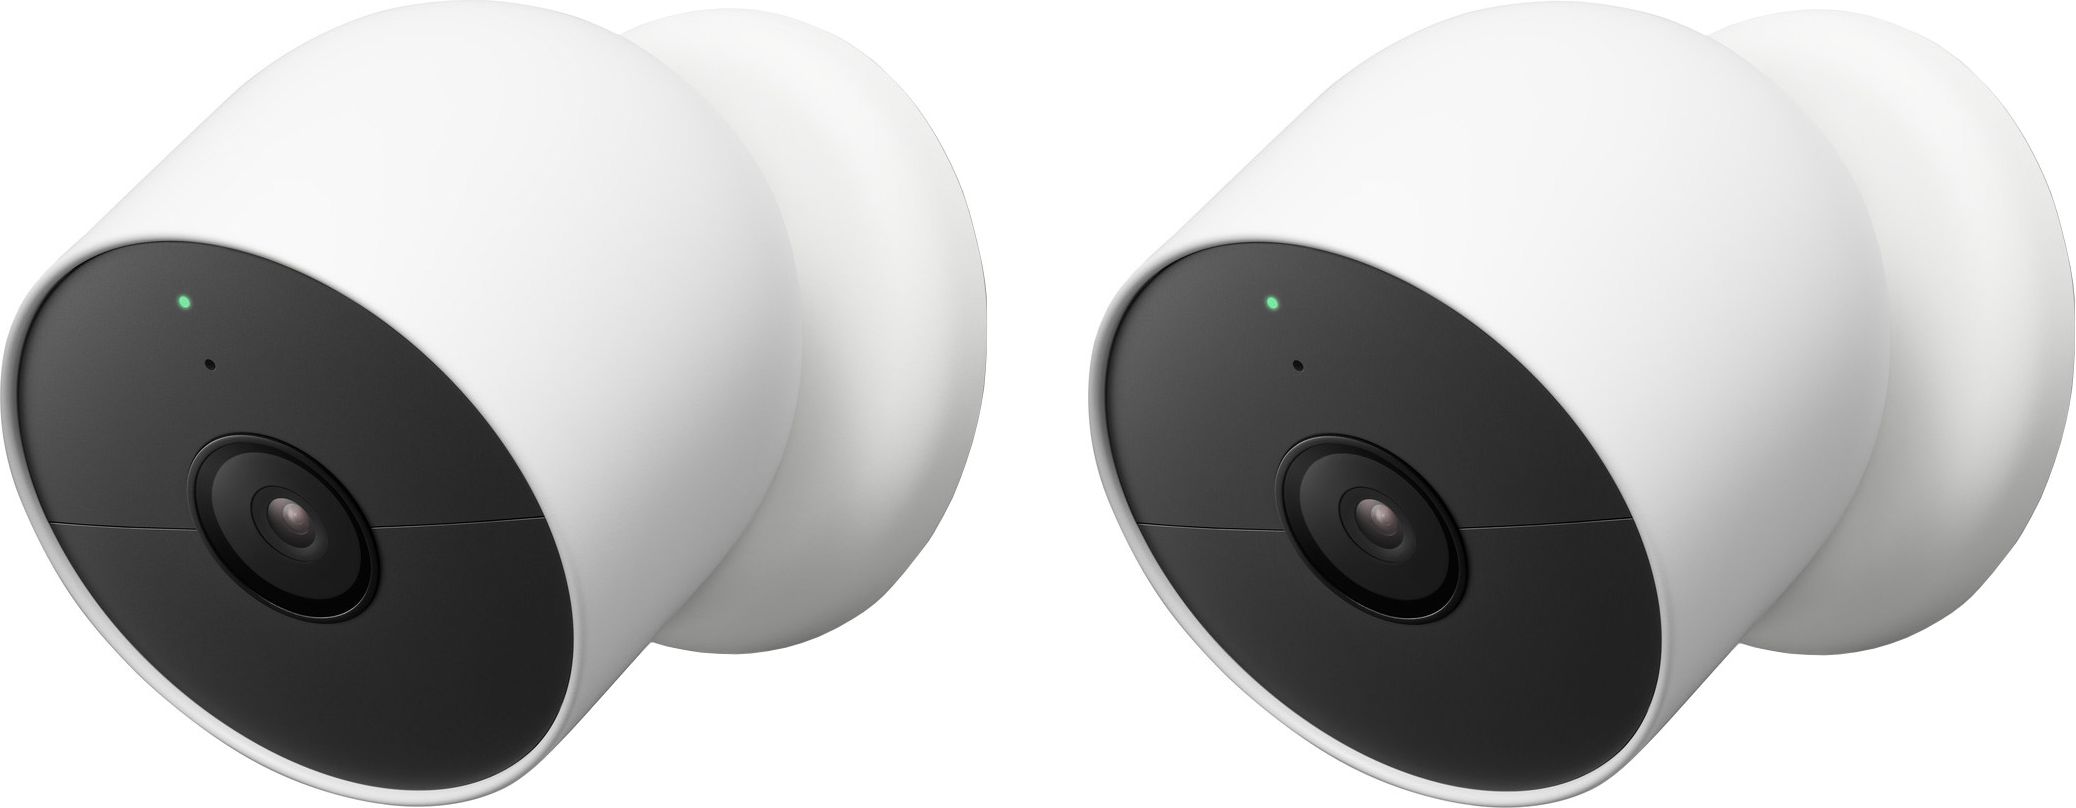 Google Nest Cam Full HD 1080p Smart Home Security Camera - White, White